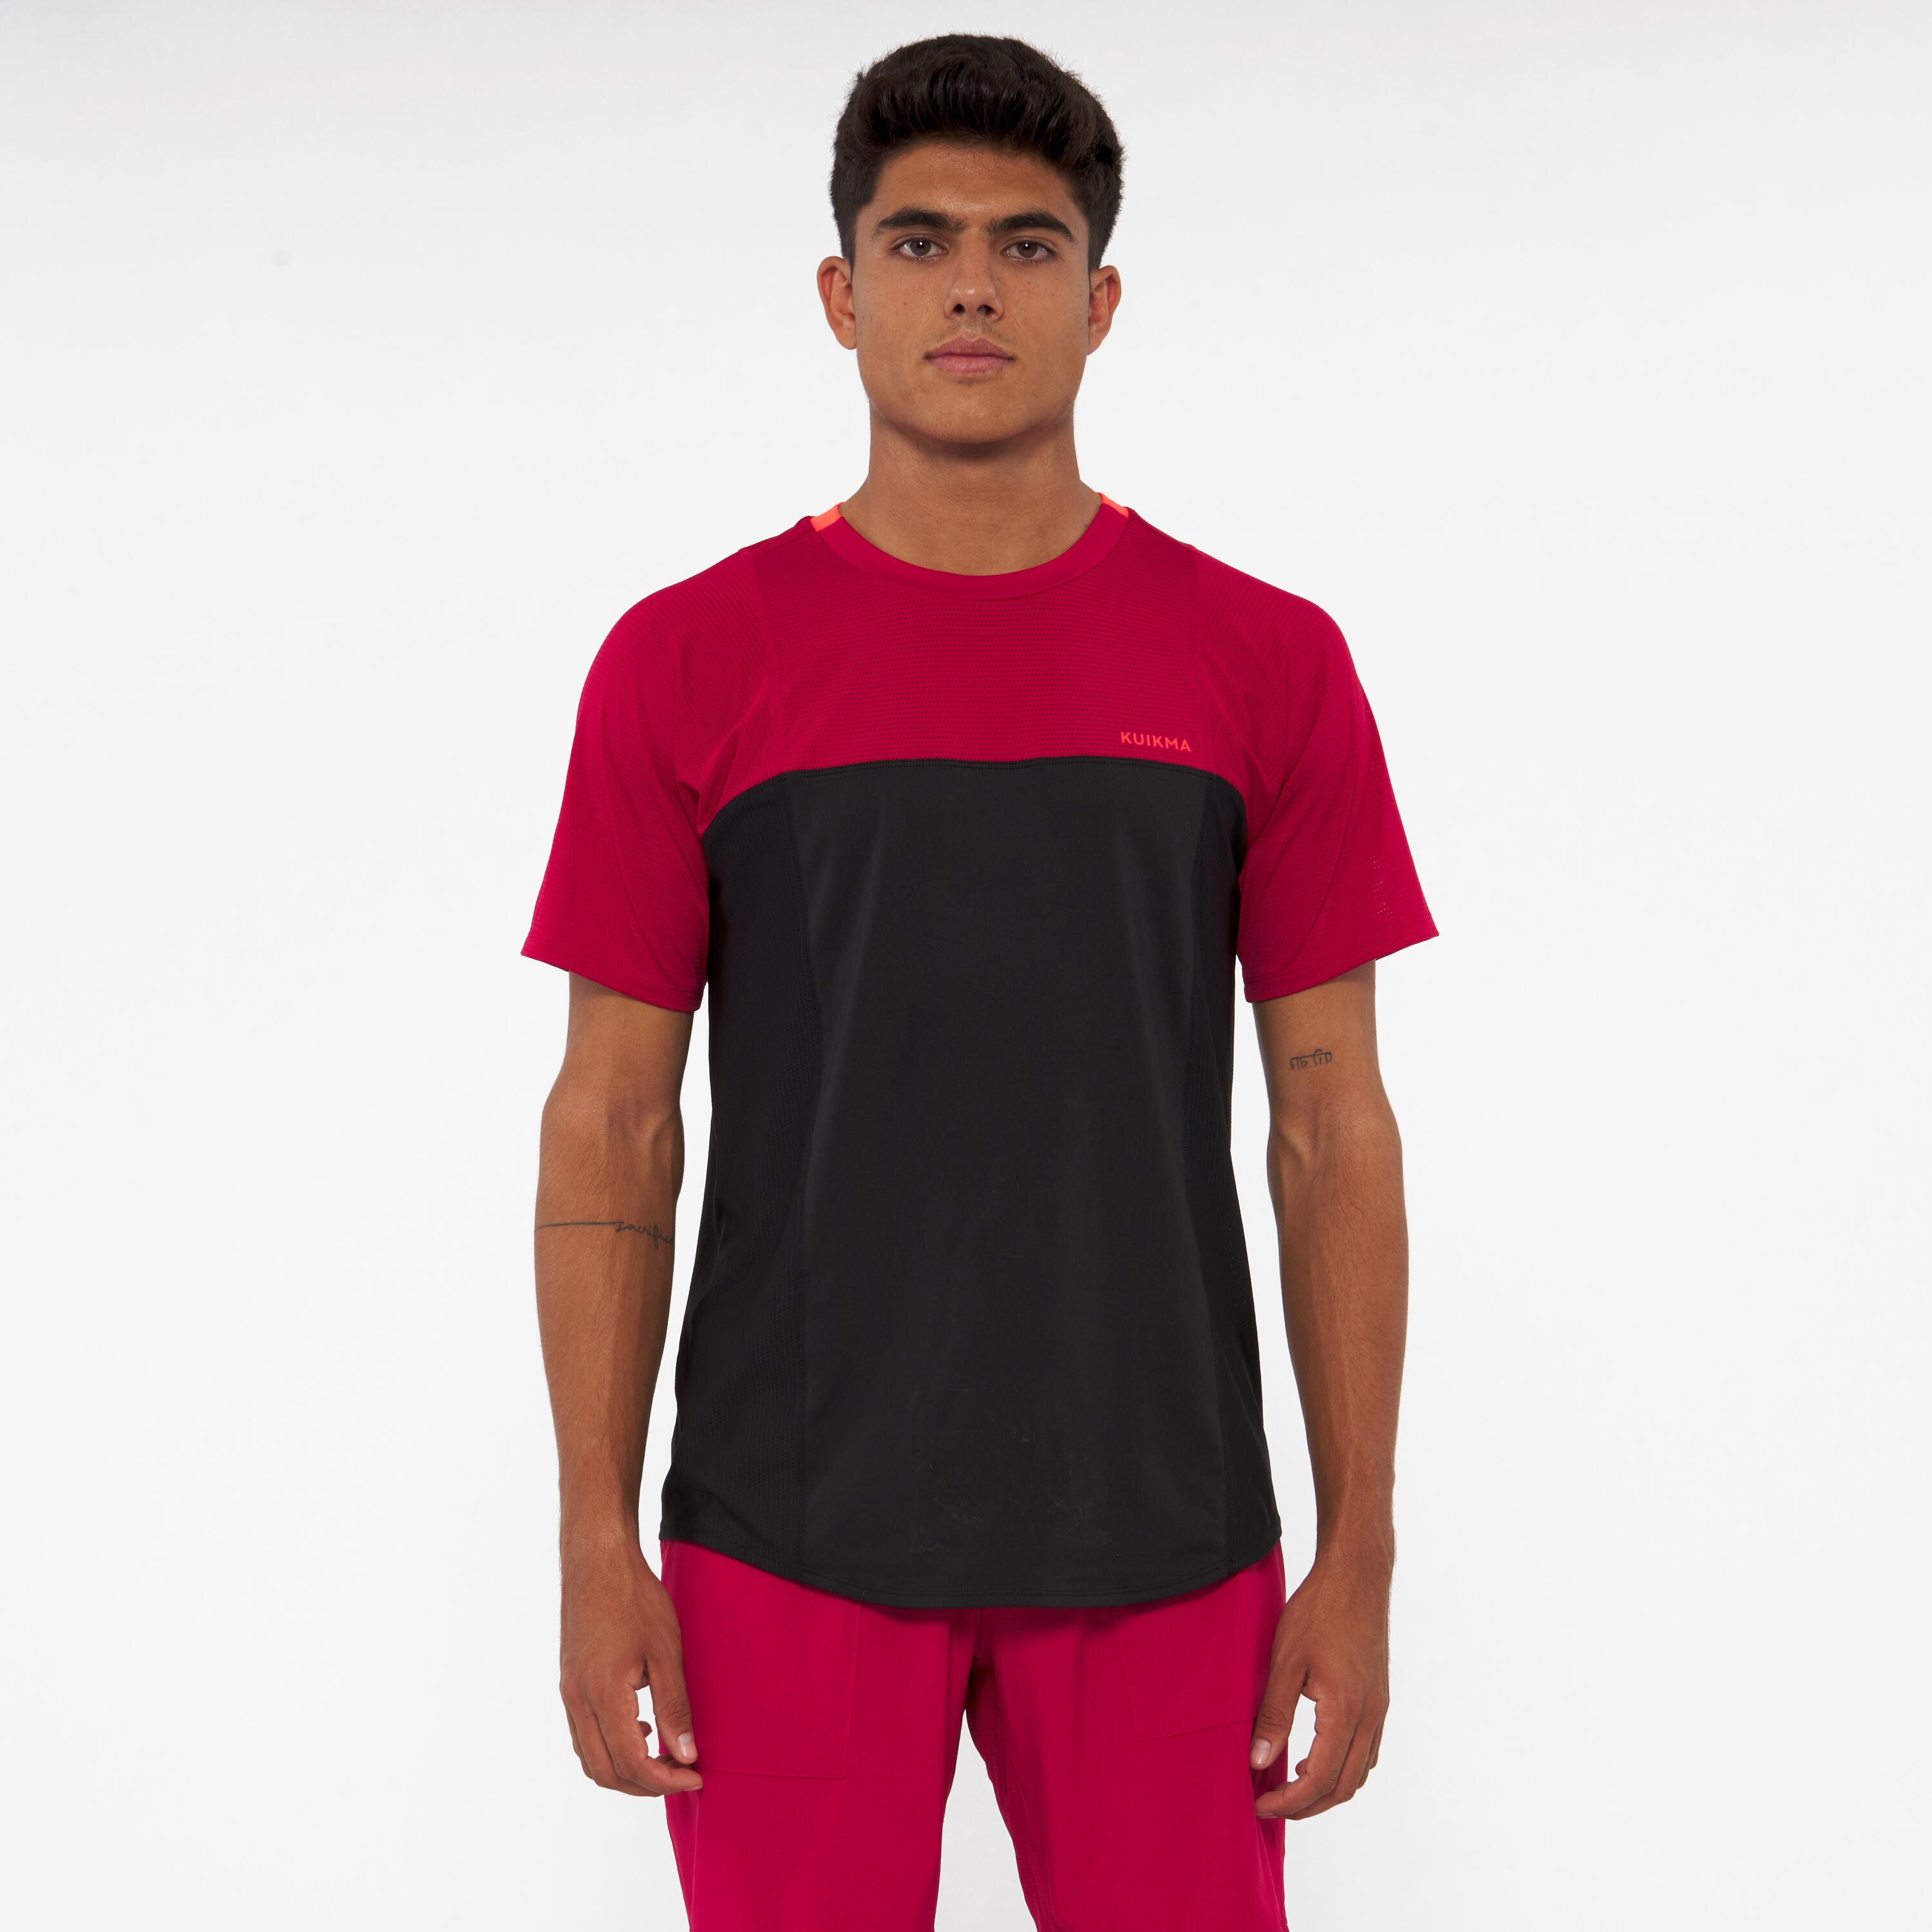 KUIKMA Men's Padel Short-Sleeved Breathable T-Shirt - Black/Red